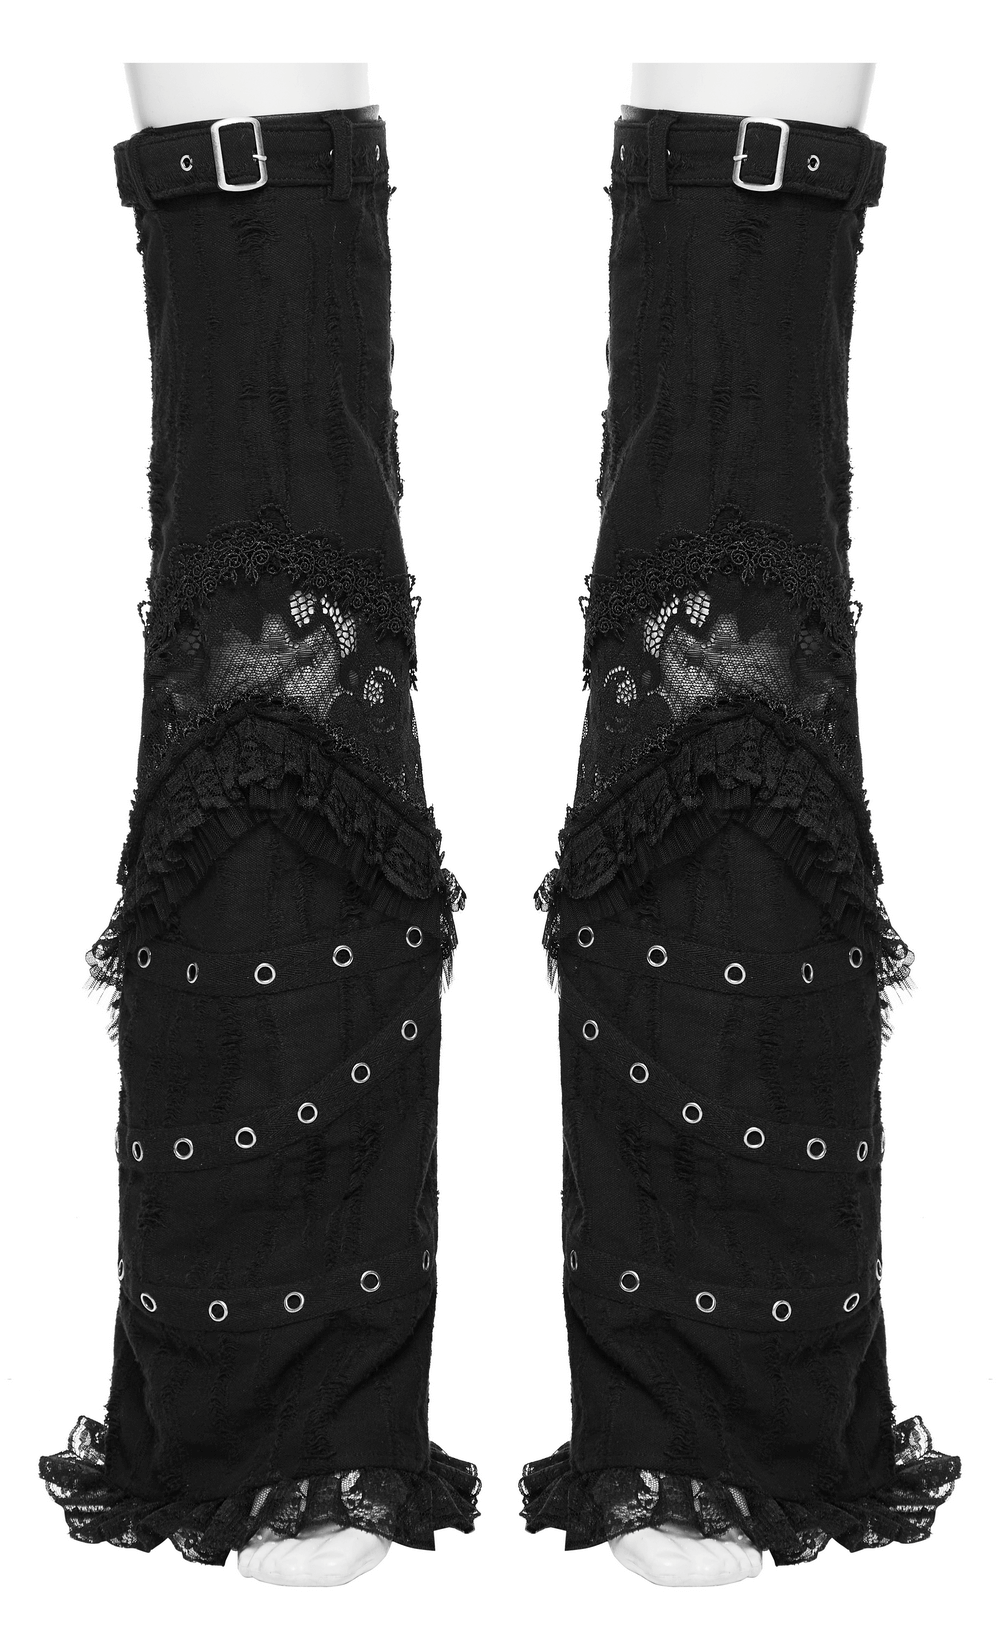 Stylish Gothic Daily Leg Warmers with Elegant Lace